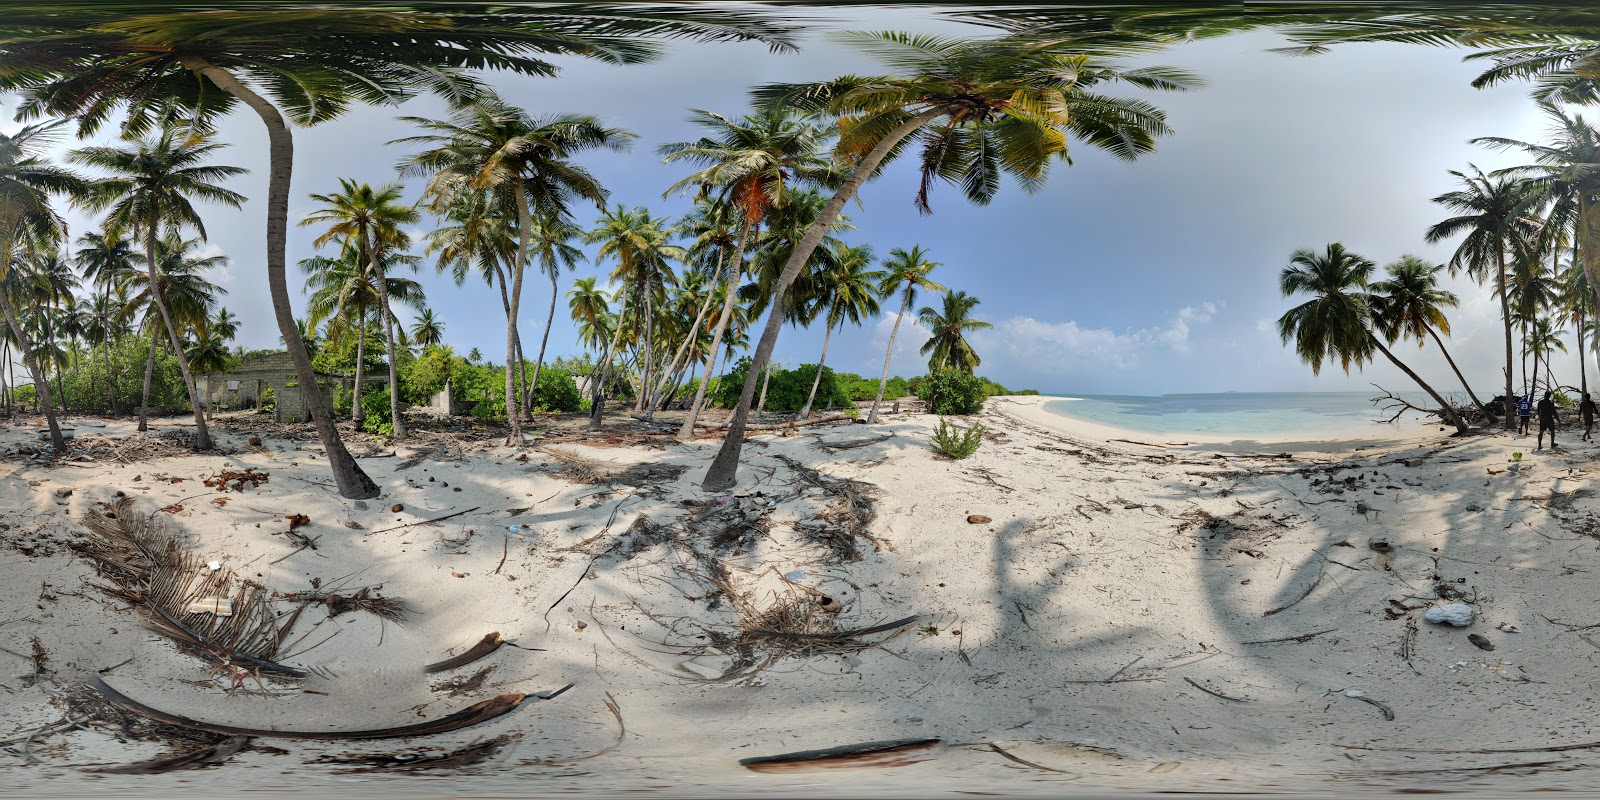 Foto de Hathifushi beach zona salvaje